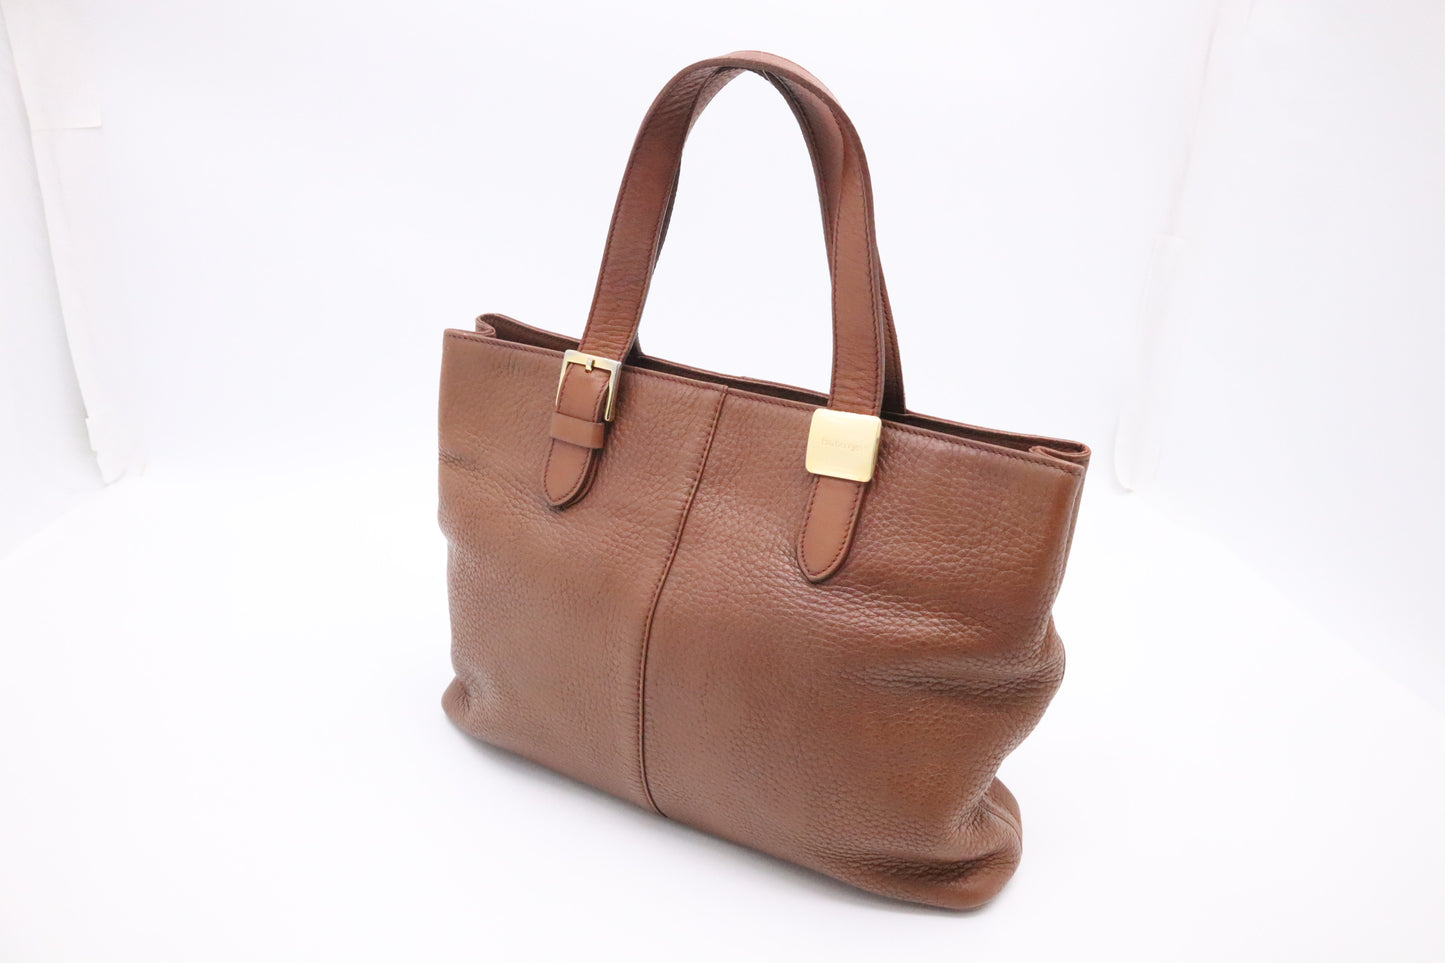 Burberry Handbag in Brown Leather